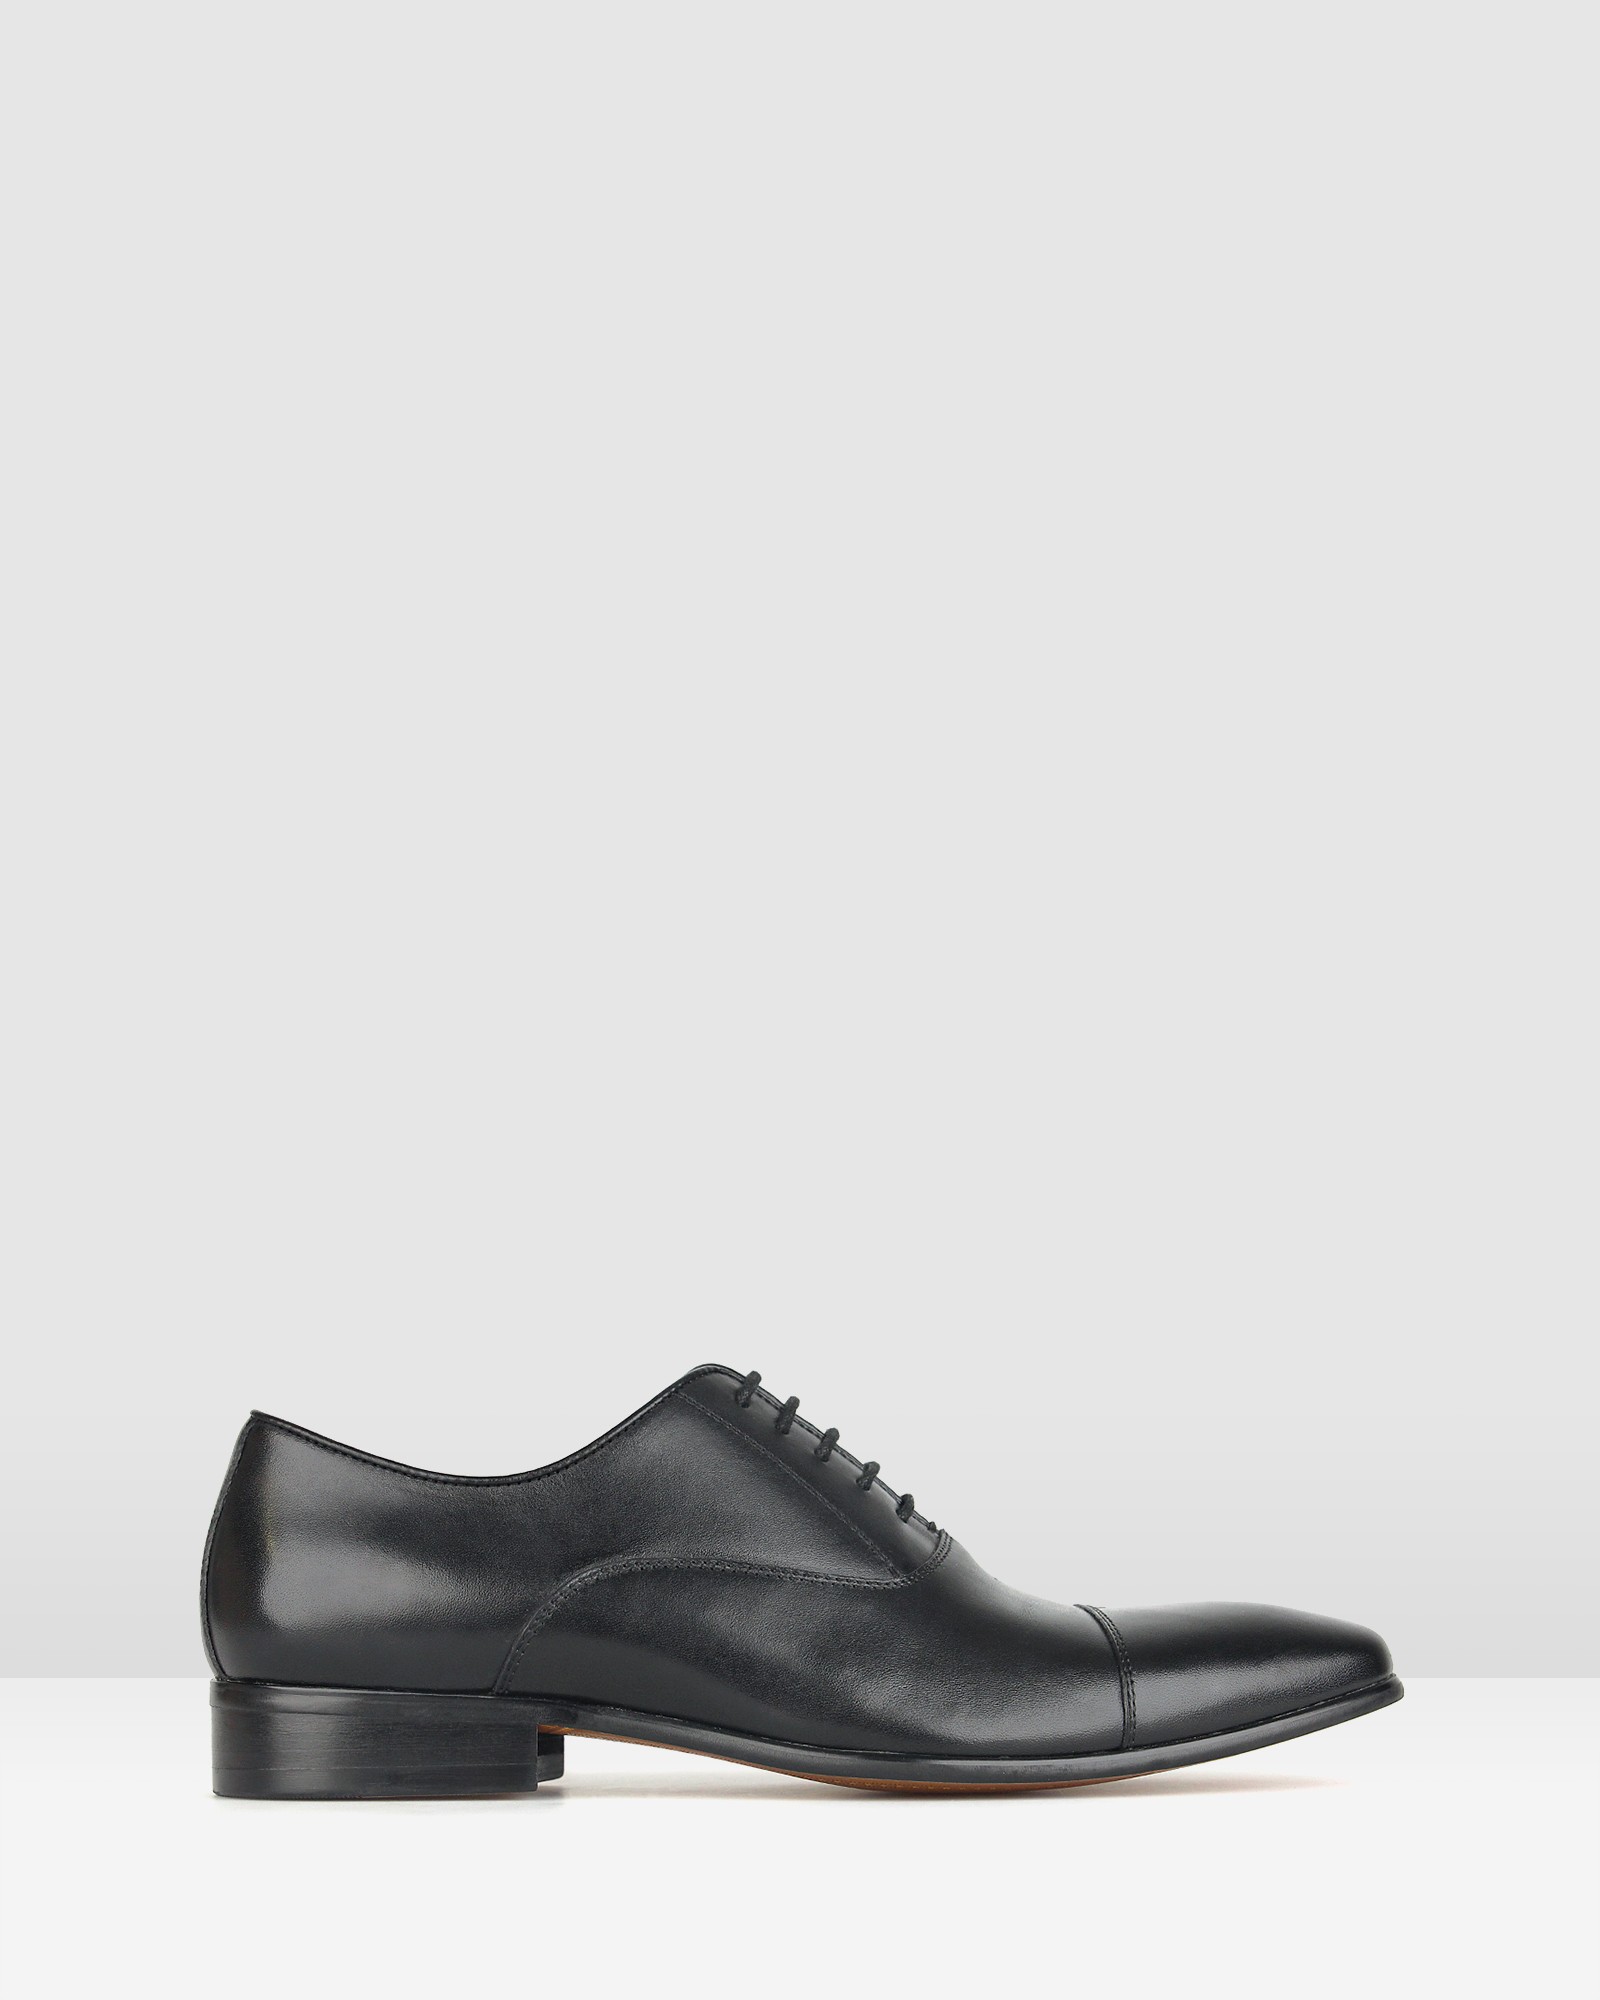 Zap Leather Oxford Dress Shoes Black by Zu | ShoeSales